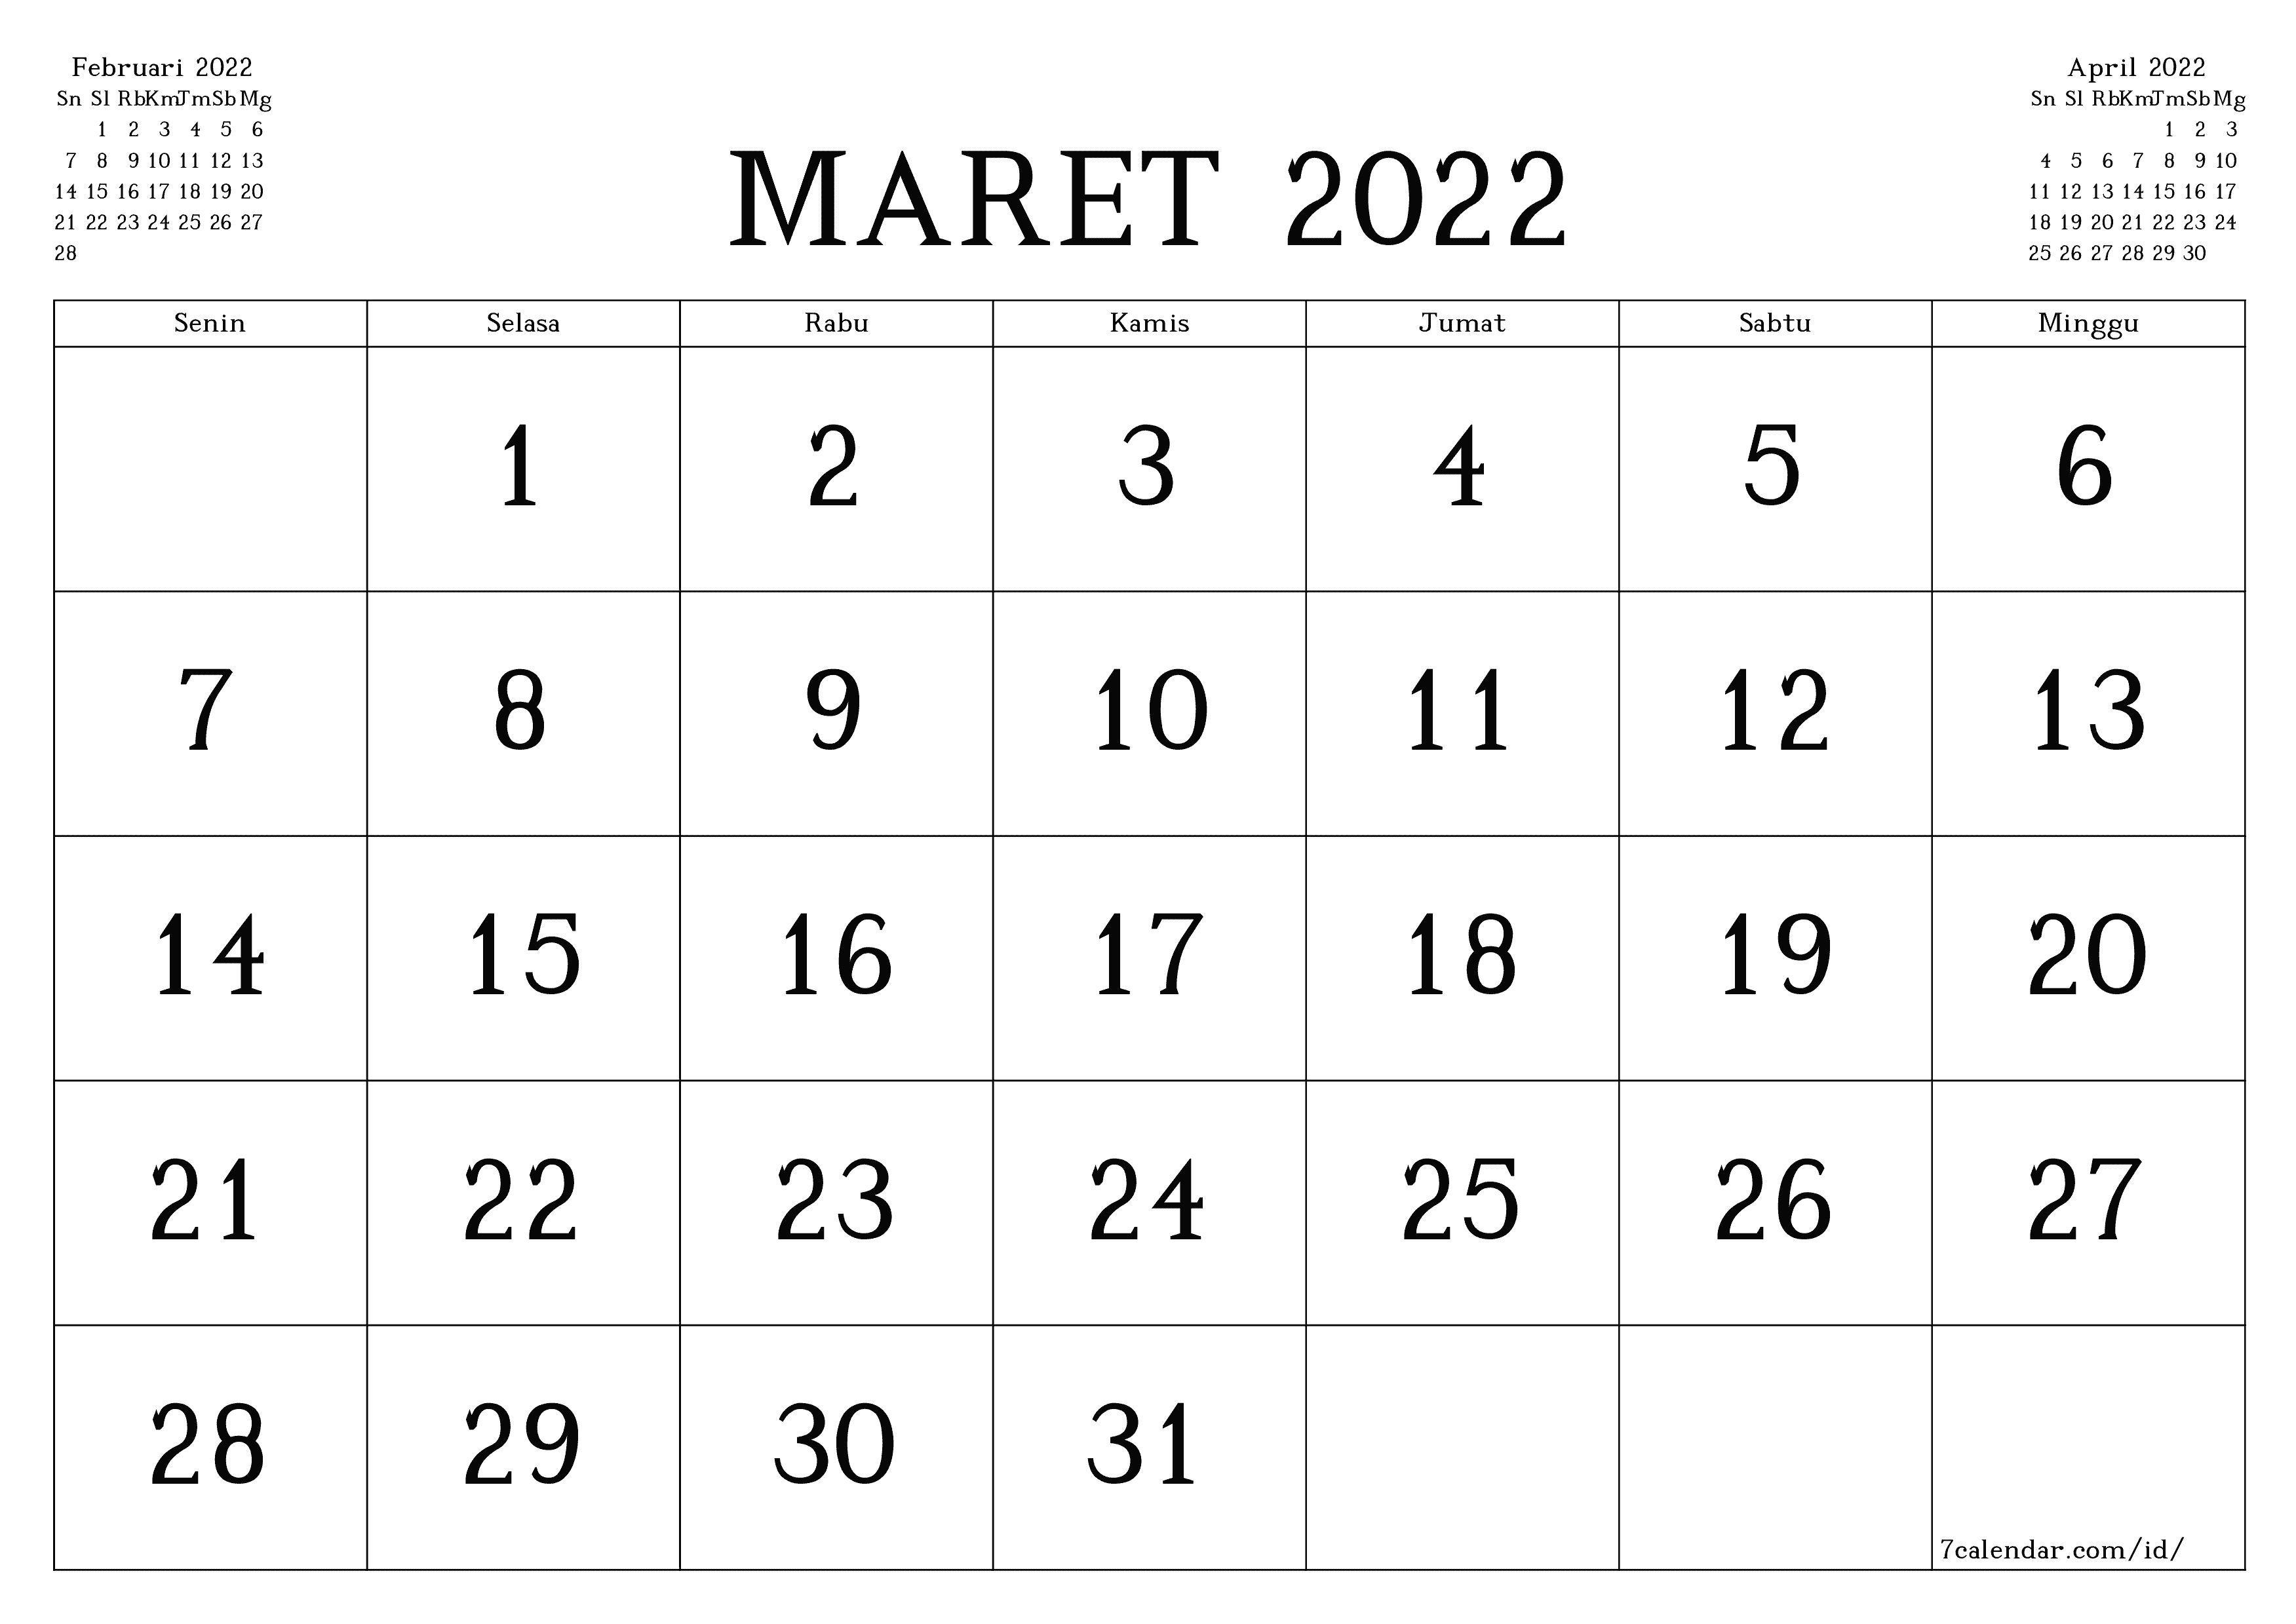 2022 maret JADWAL PELAYANAN,